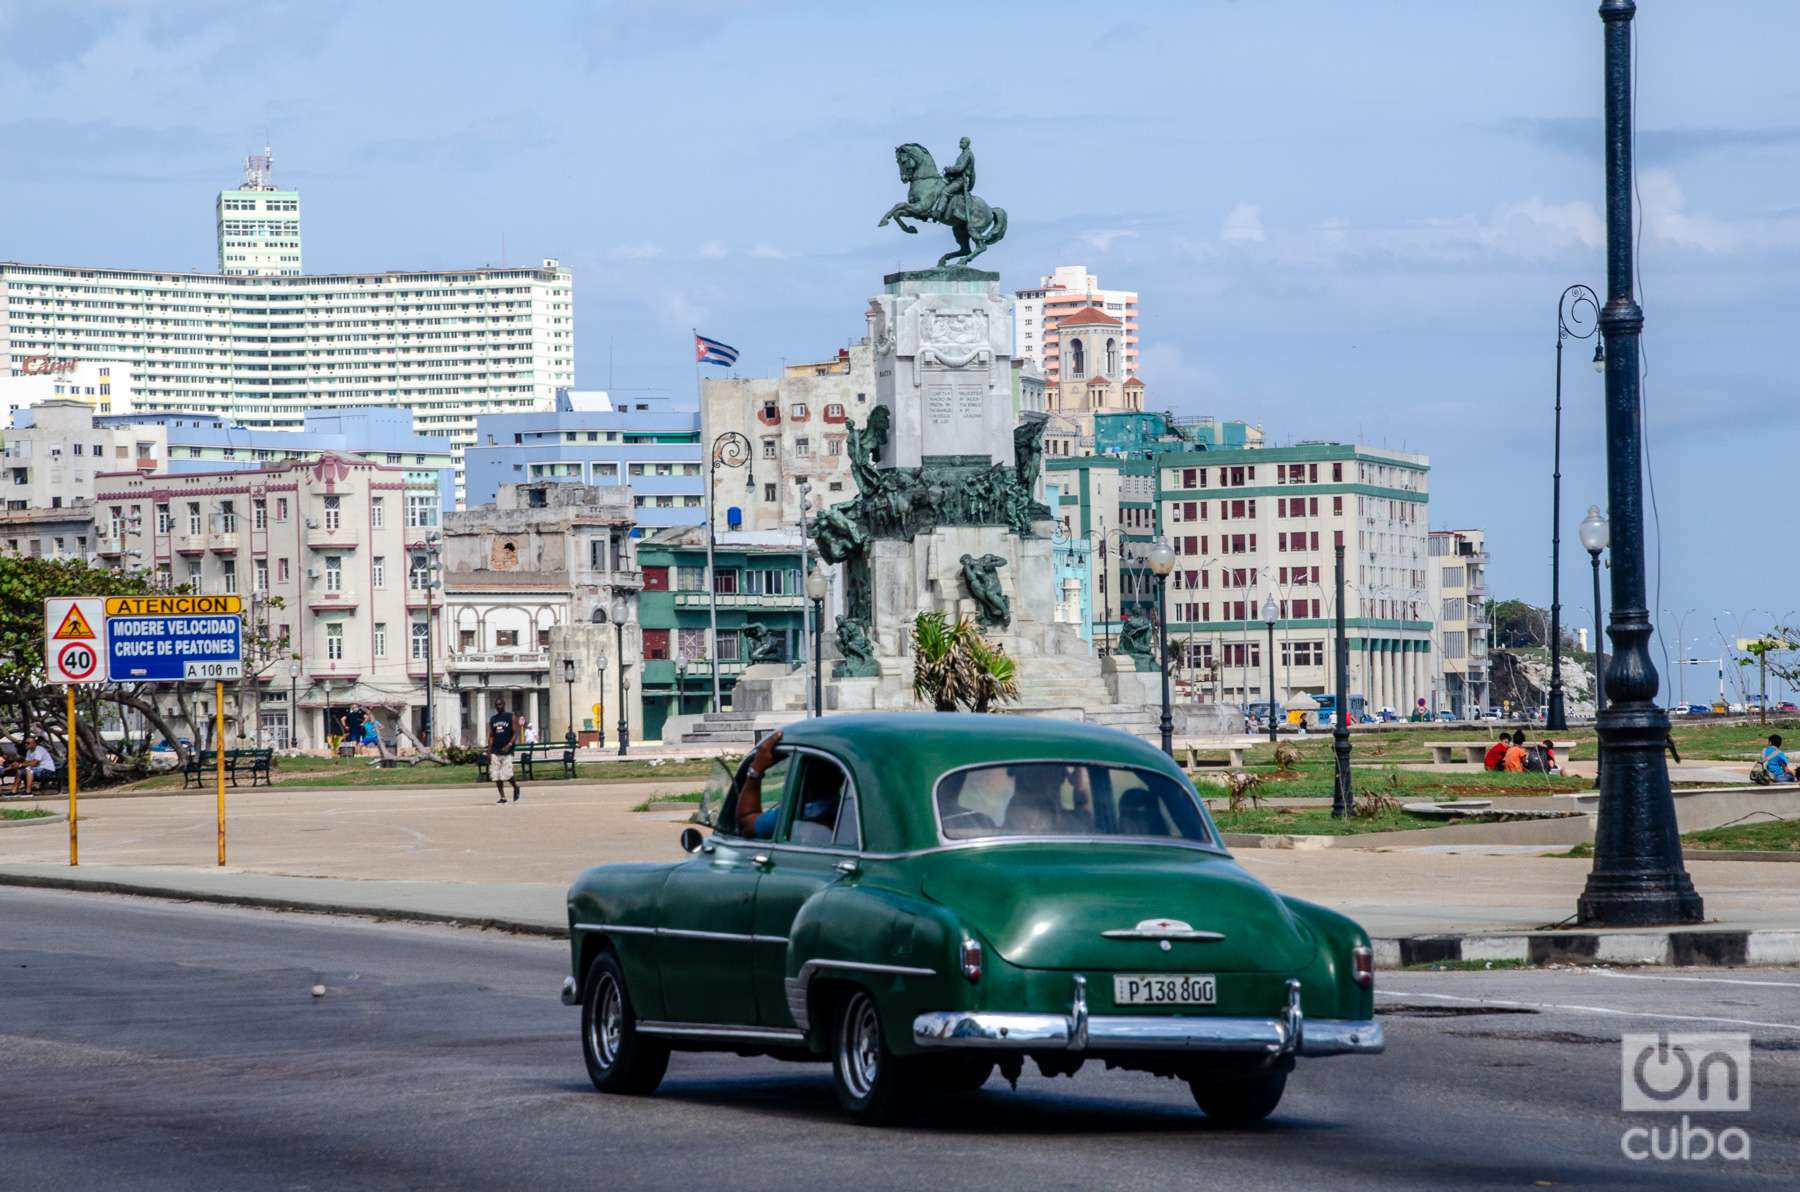 Old car and landscapes of Havana